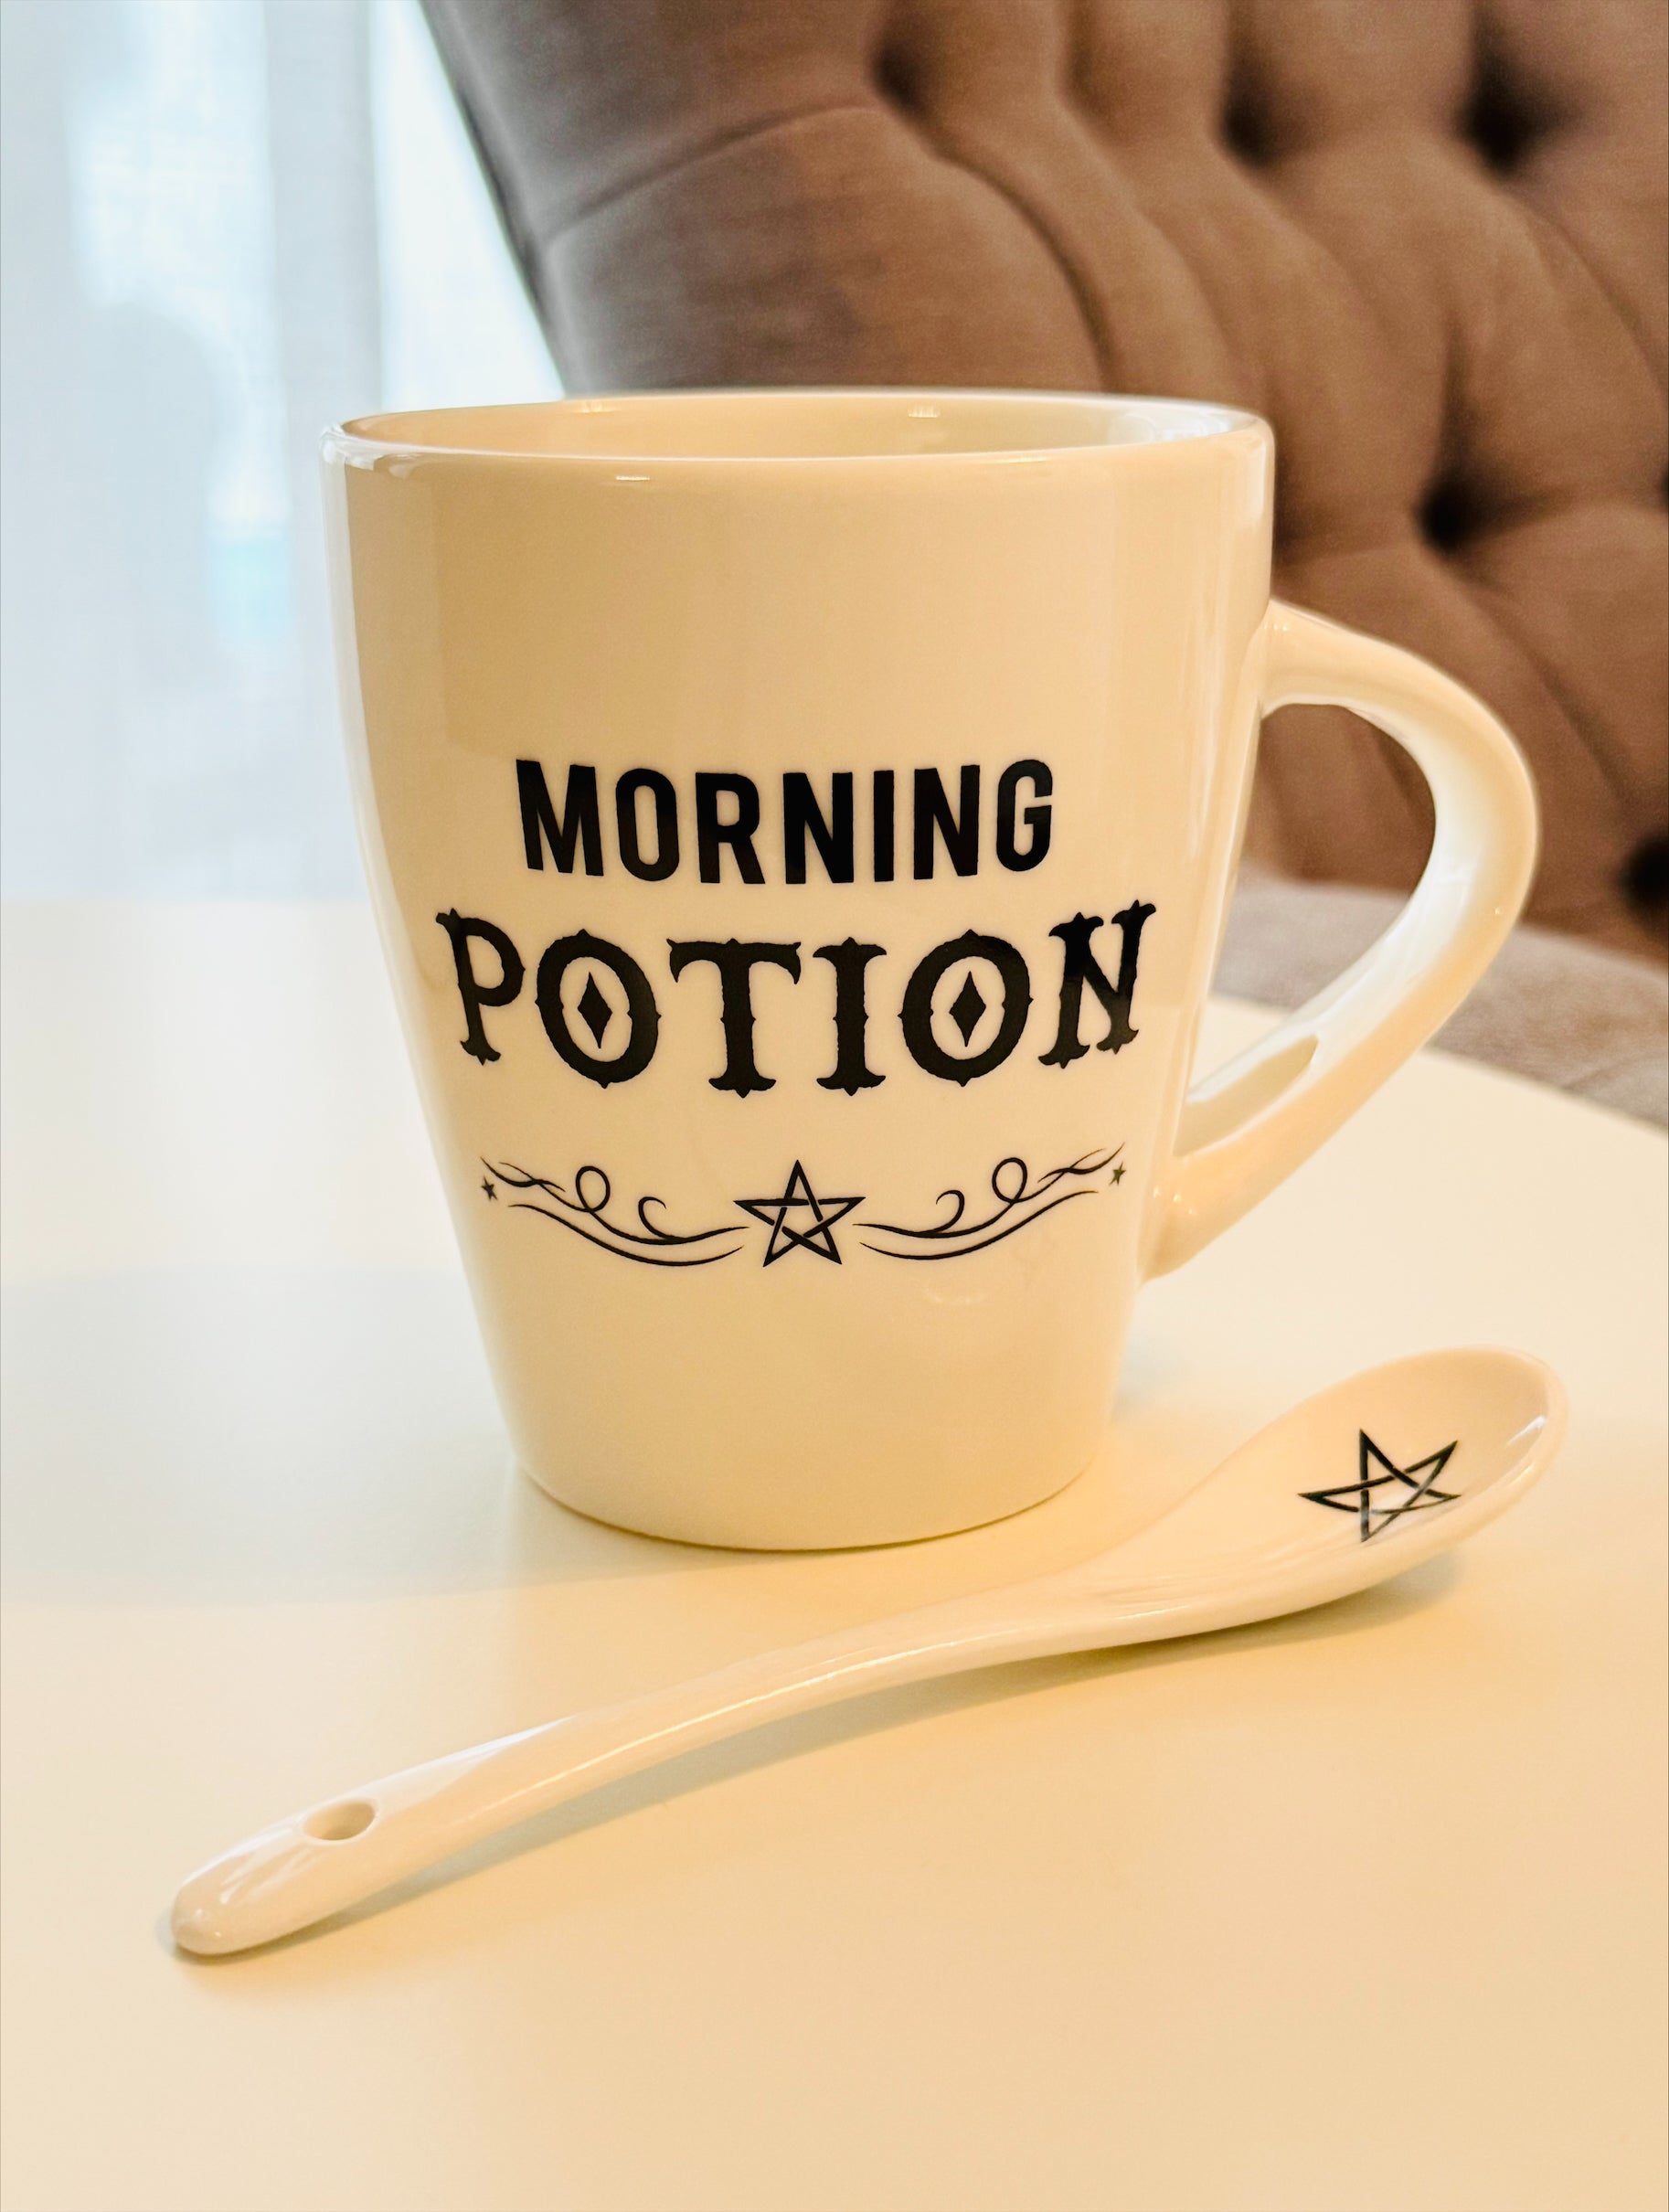 Morning Potion Mug and Spoon Set in Gift Box